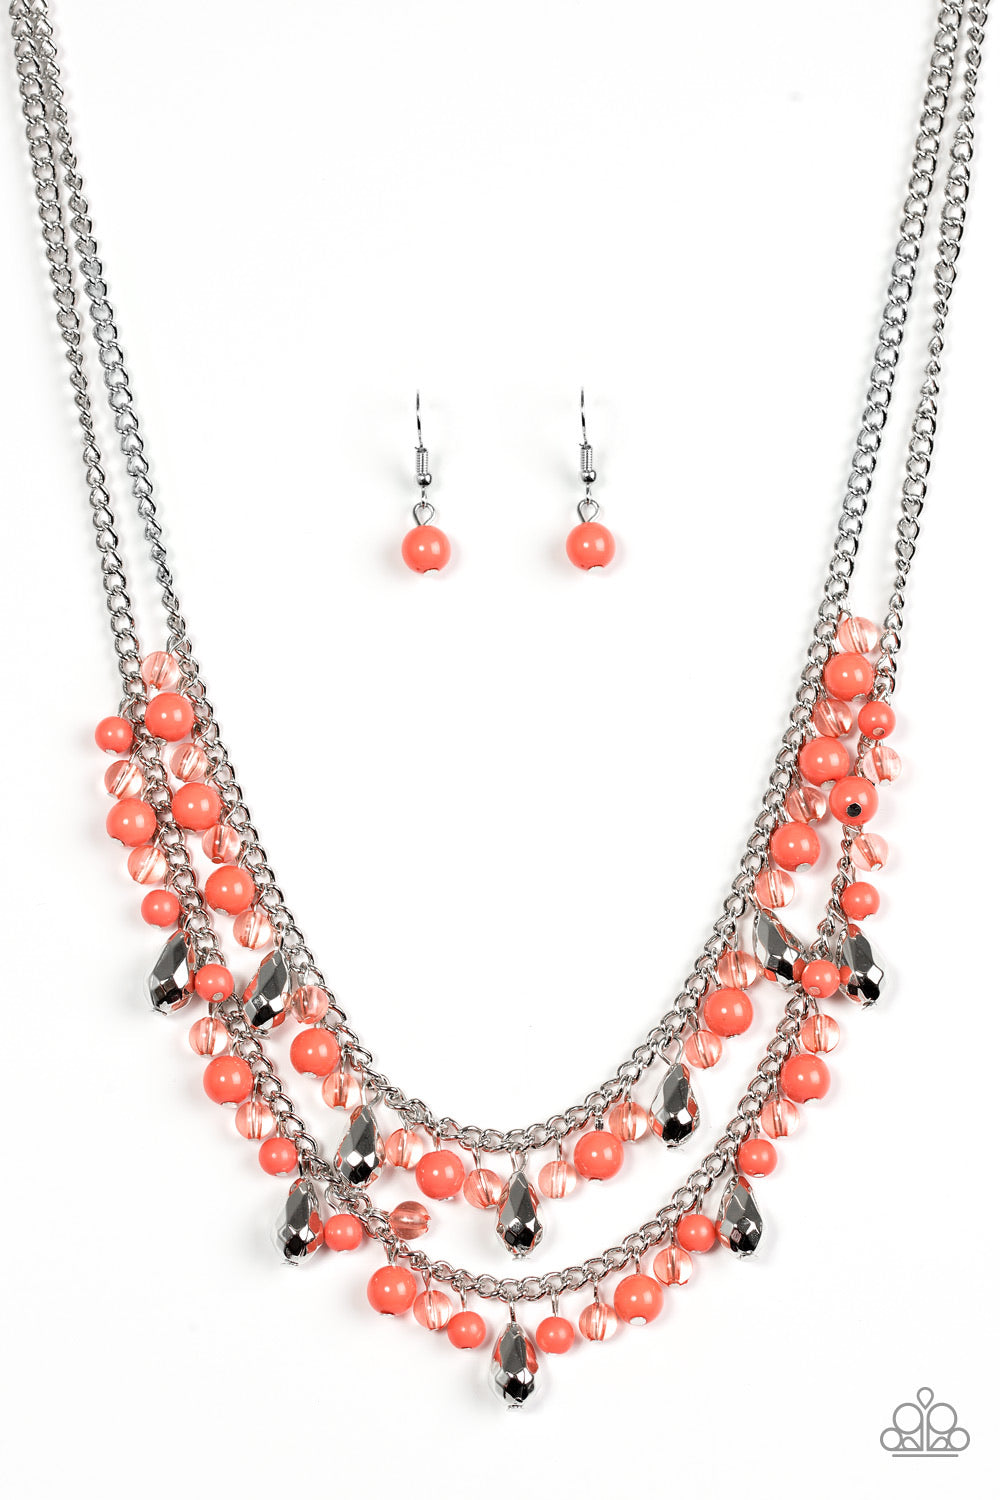 Paparazzi Accessories - Mardi Gras Glamour #N421 Peg - Orange Necklace